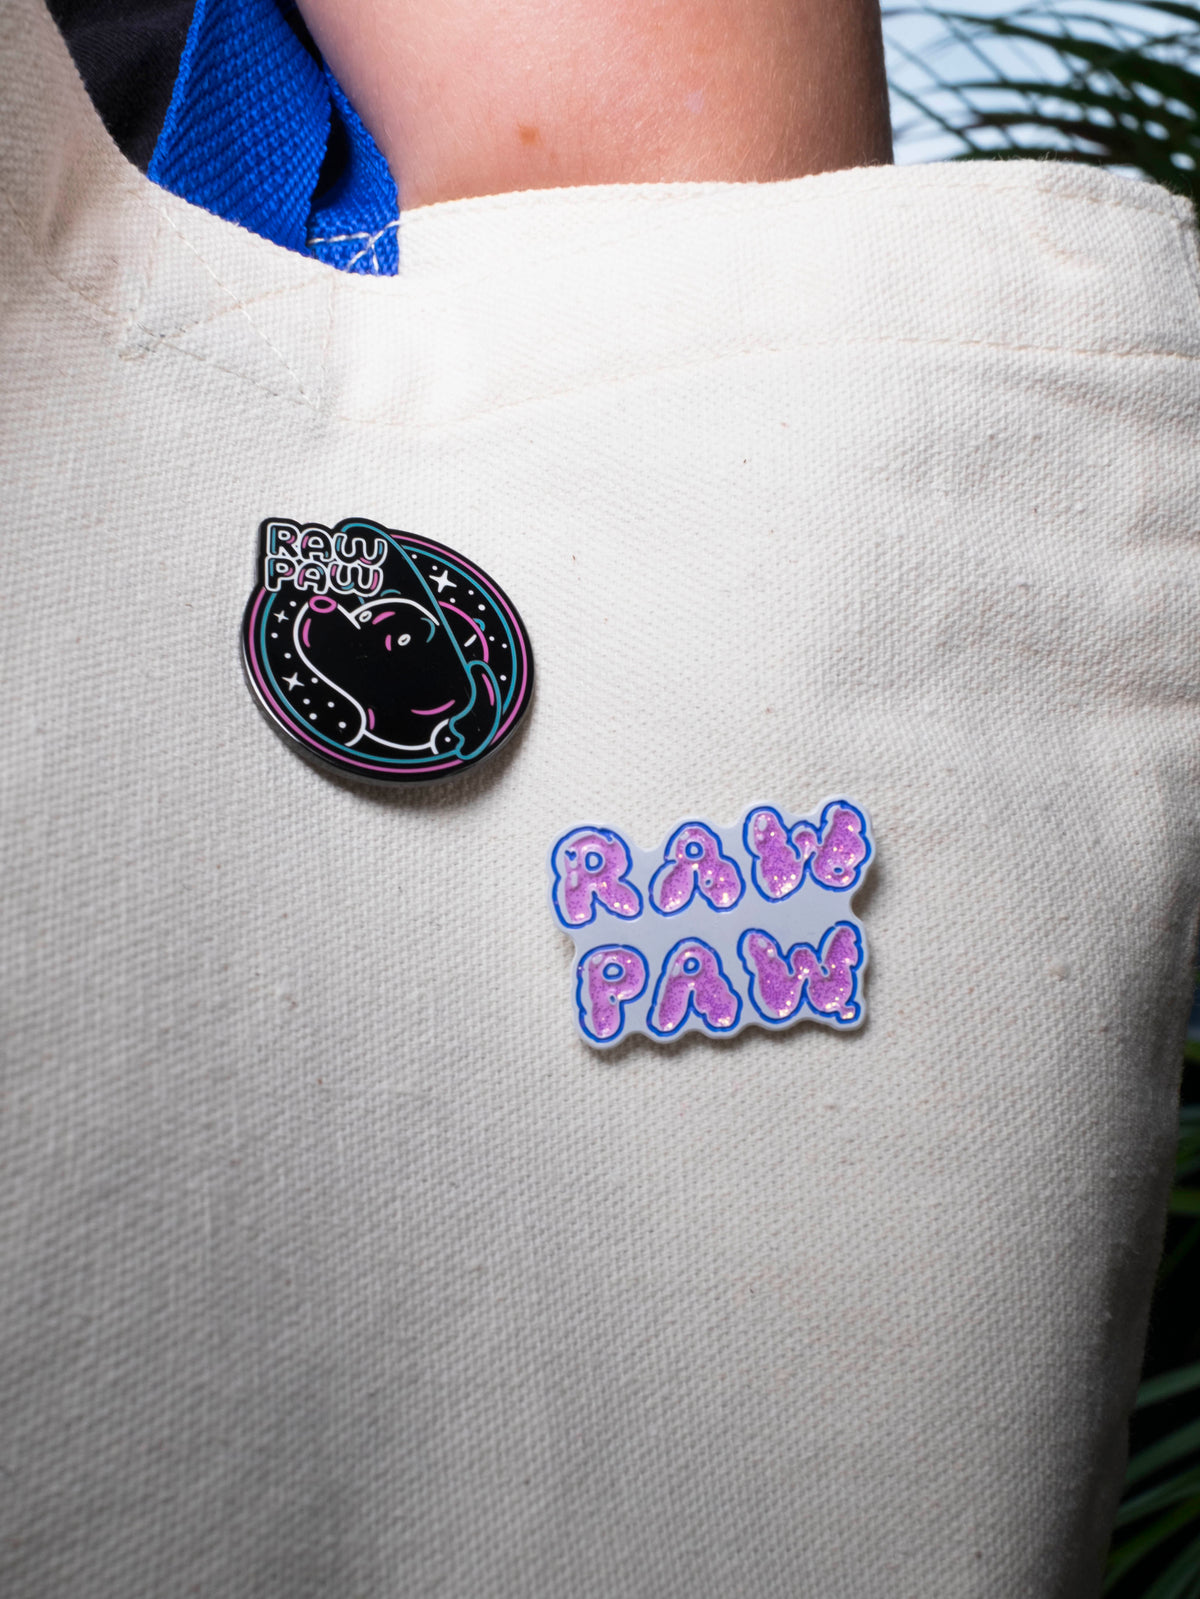 Raw Paw Pink Bubble Logo Pin